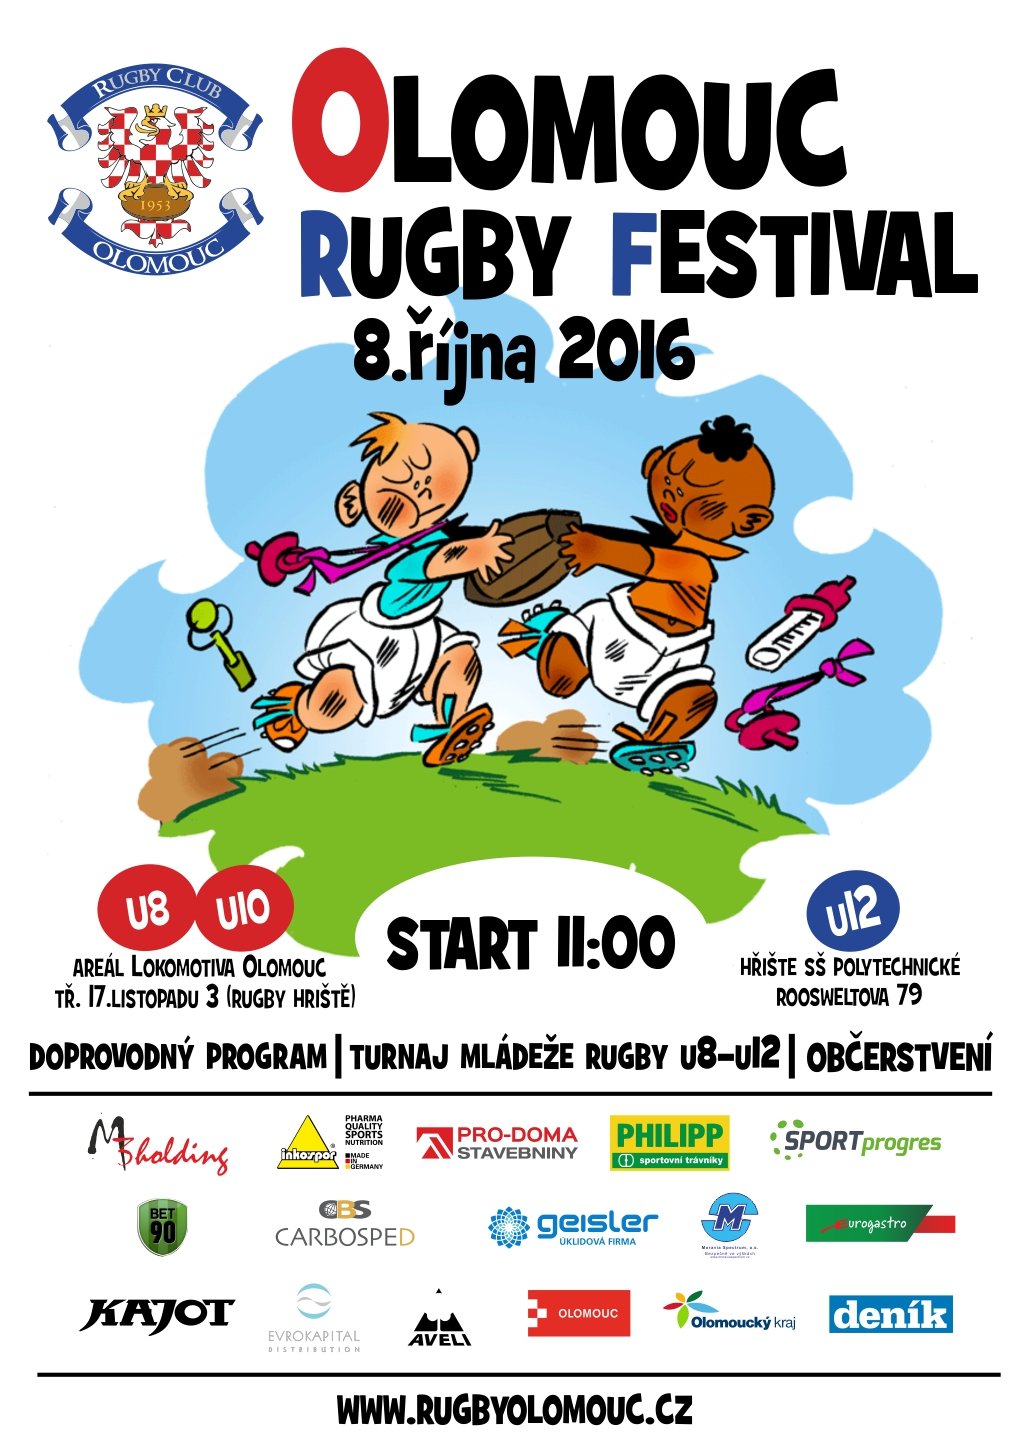 Olomouc Rugby Festival 2016